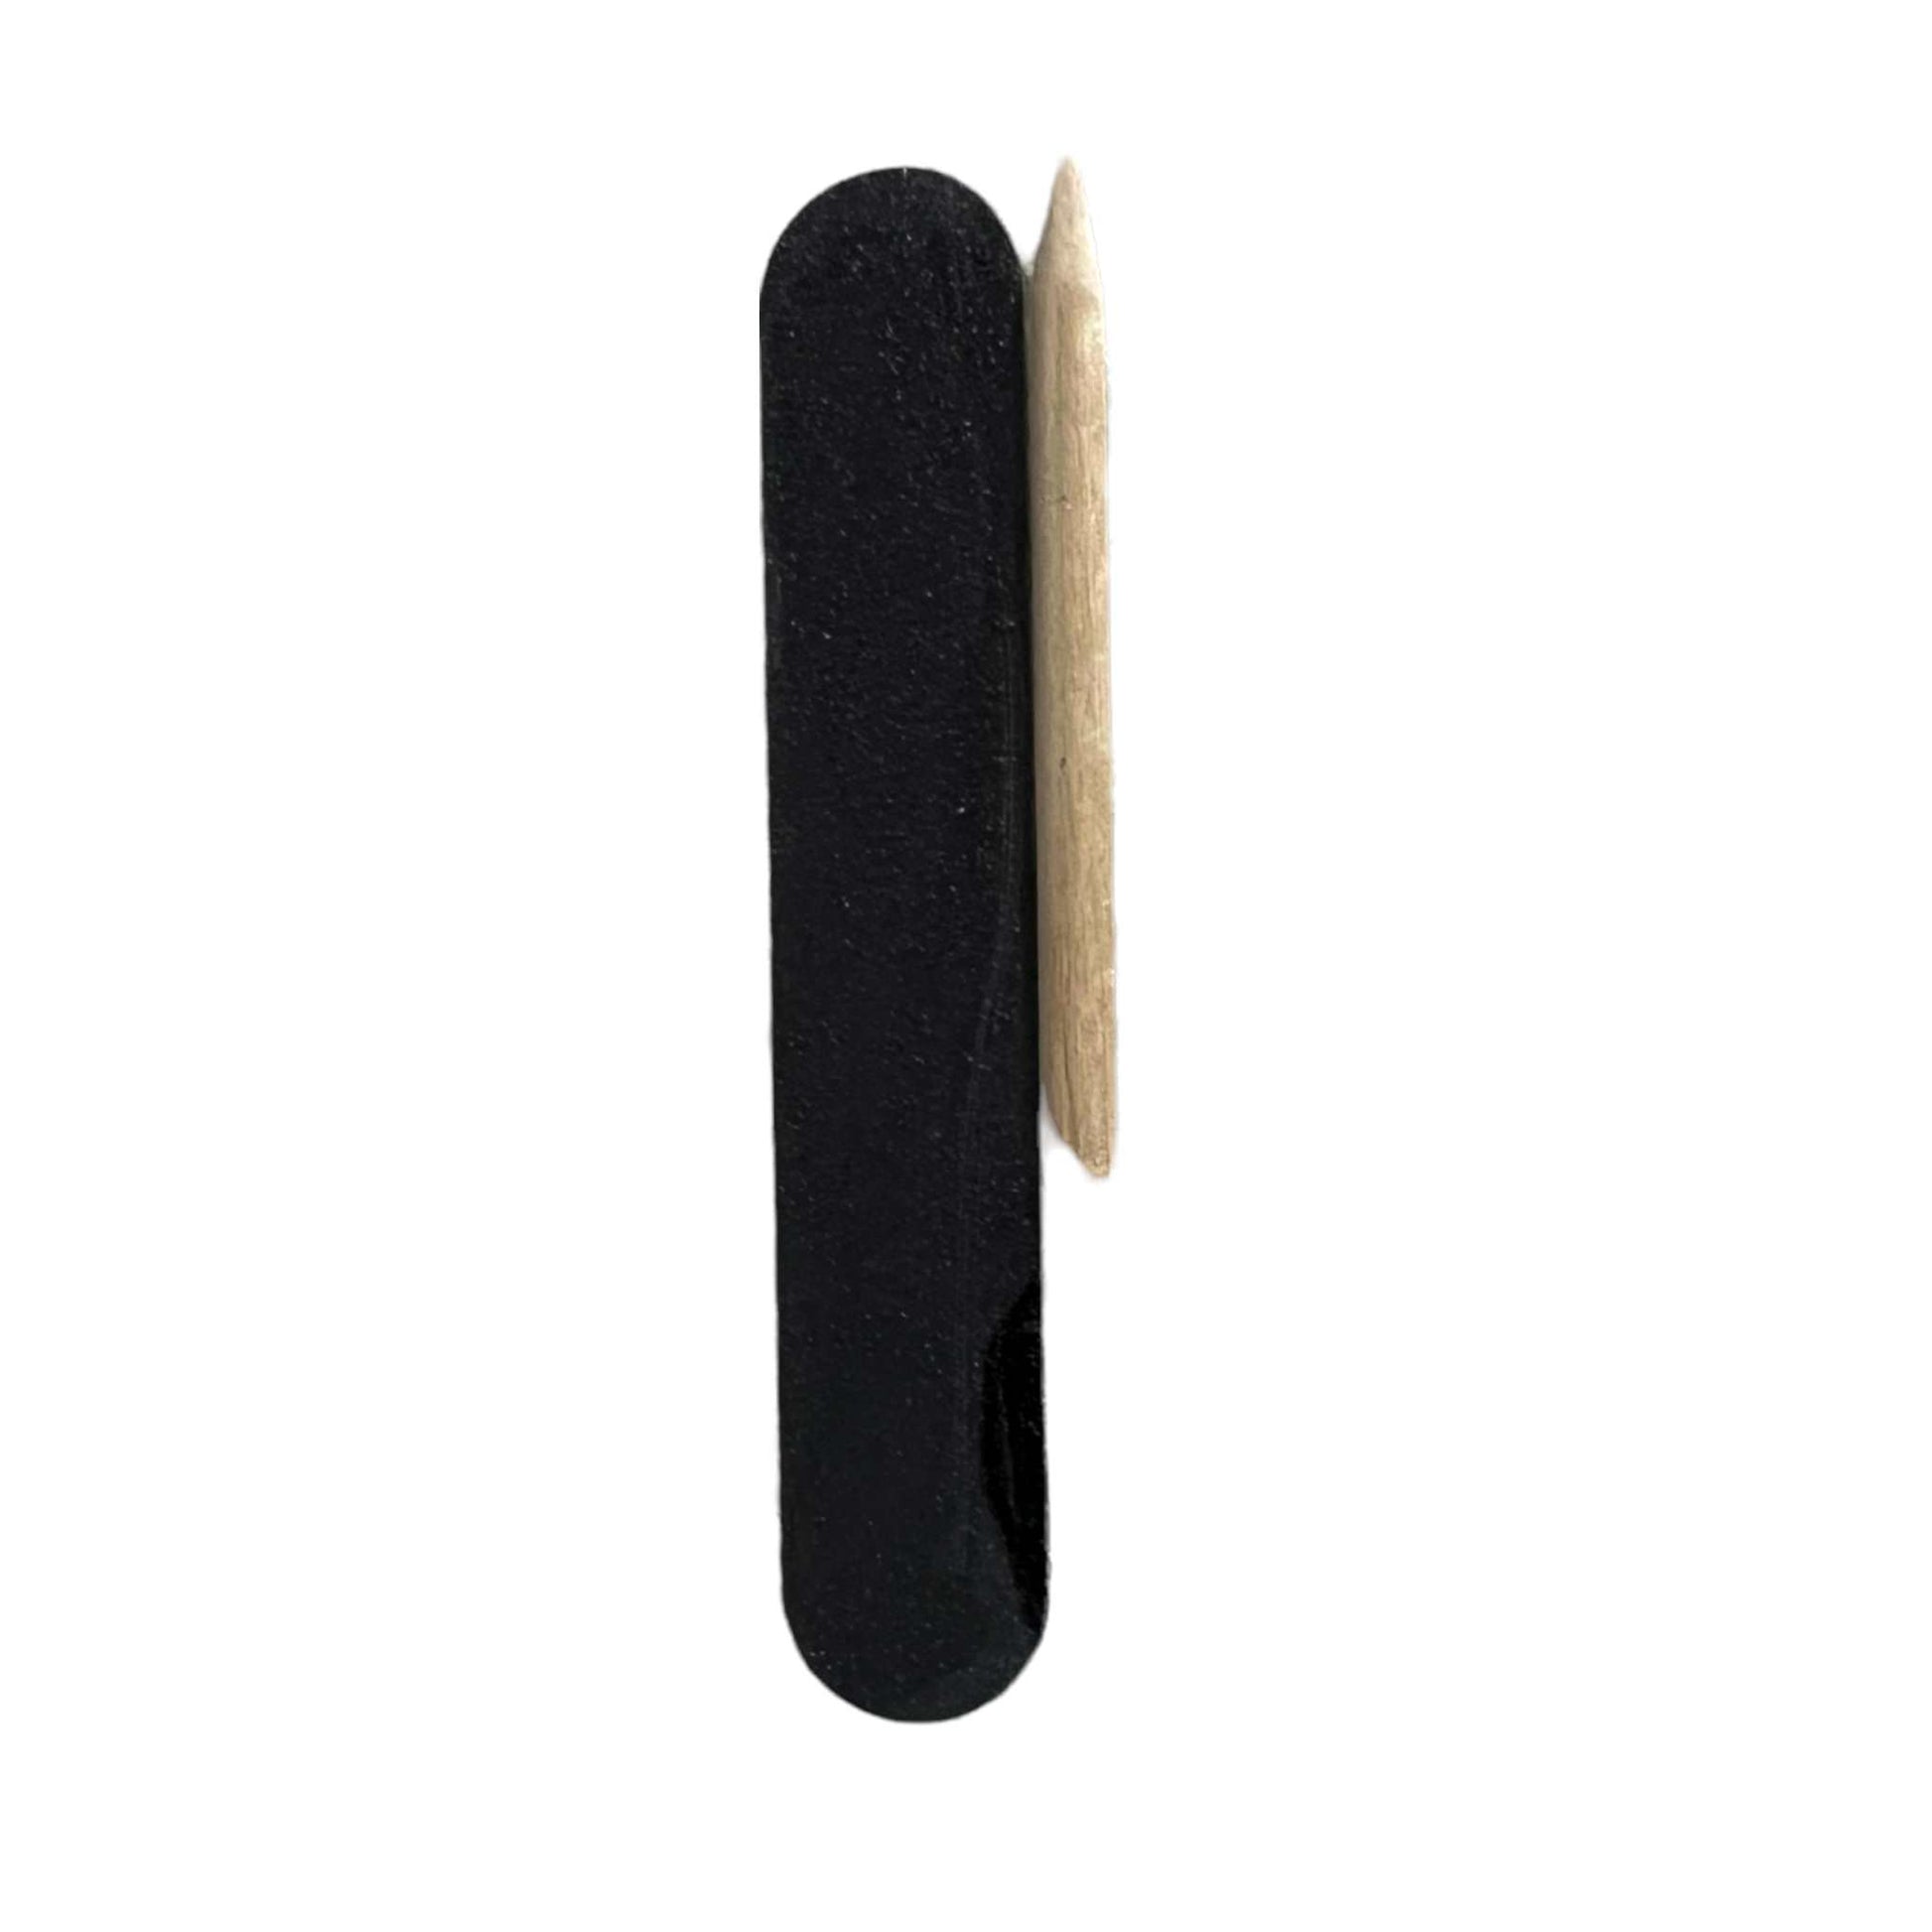 Black Nail File & Cuticle Stick set